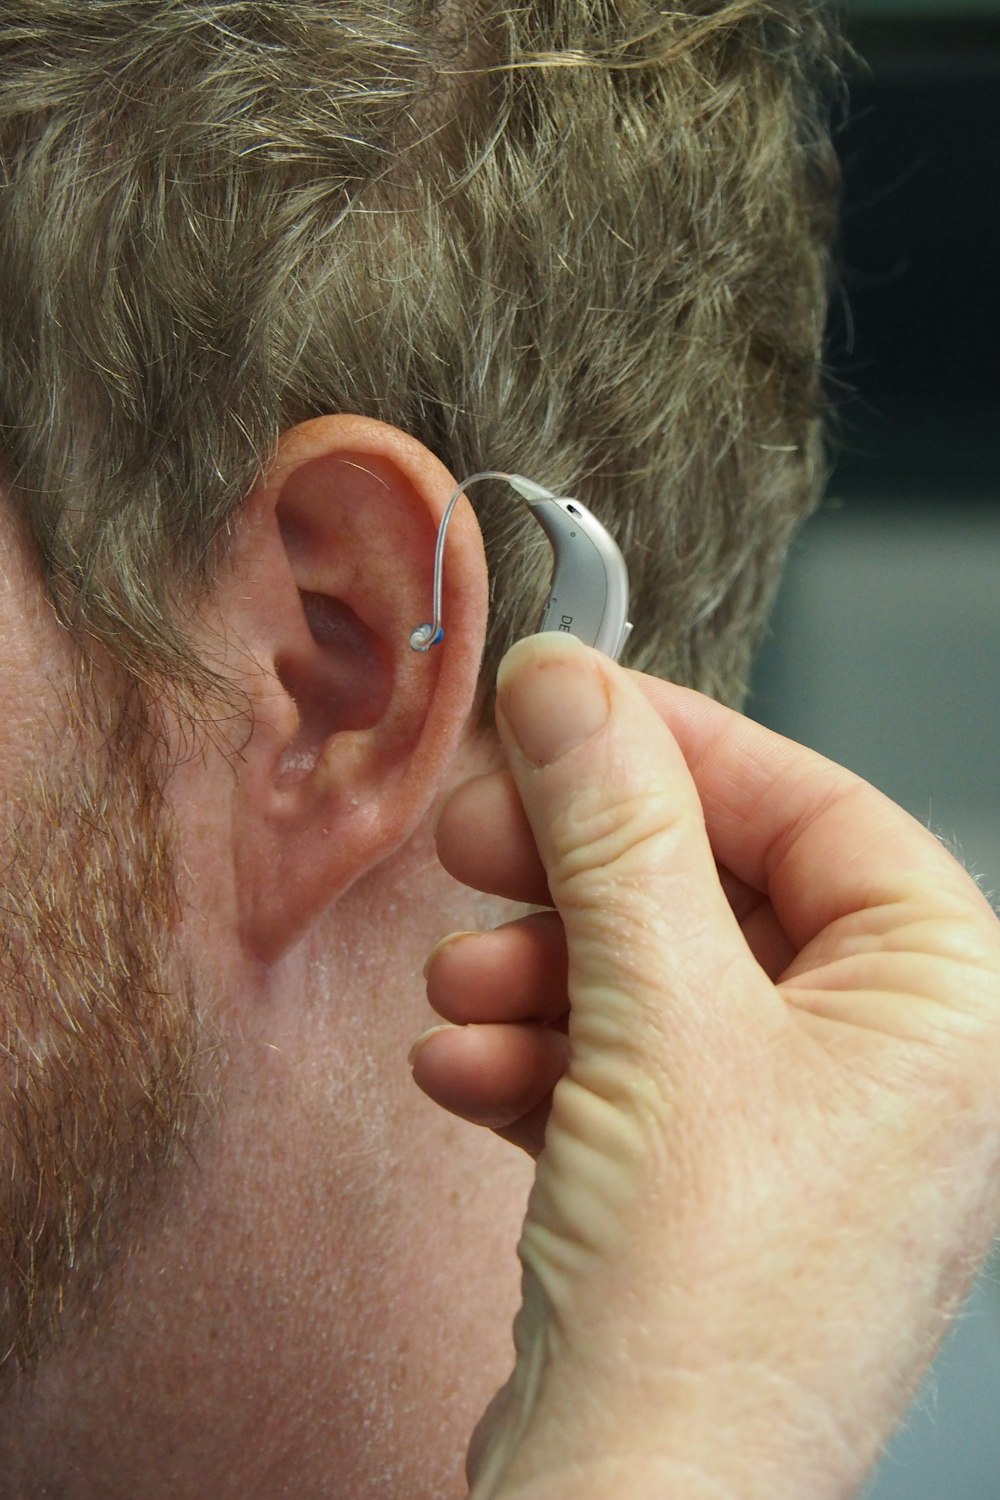 a man wearing a pair of ear piercings